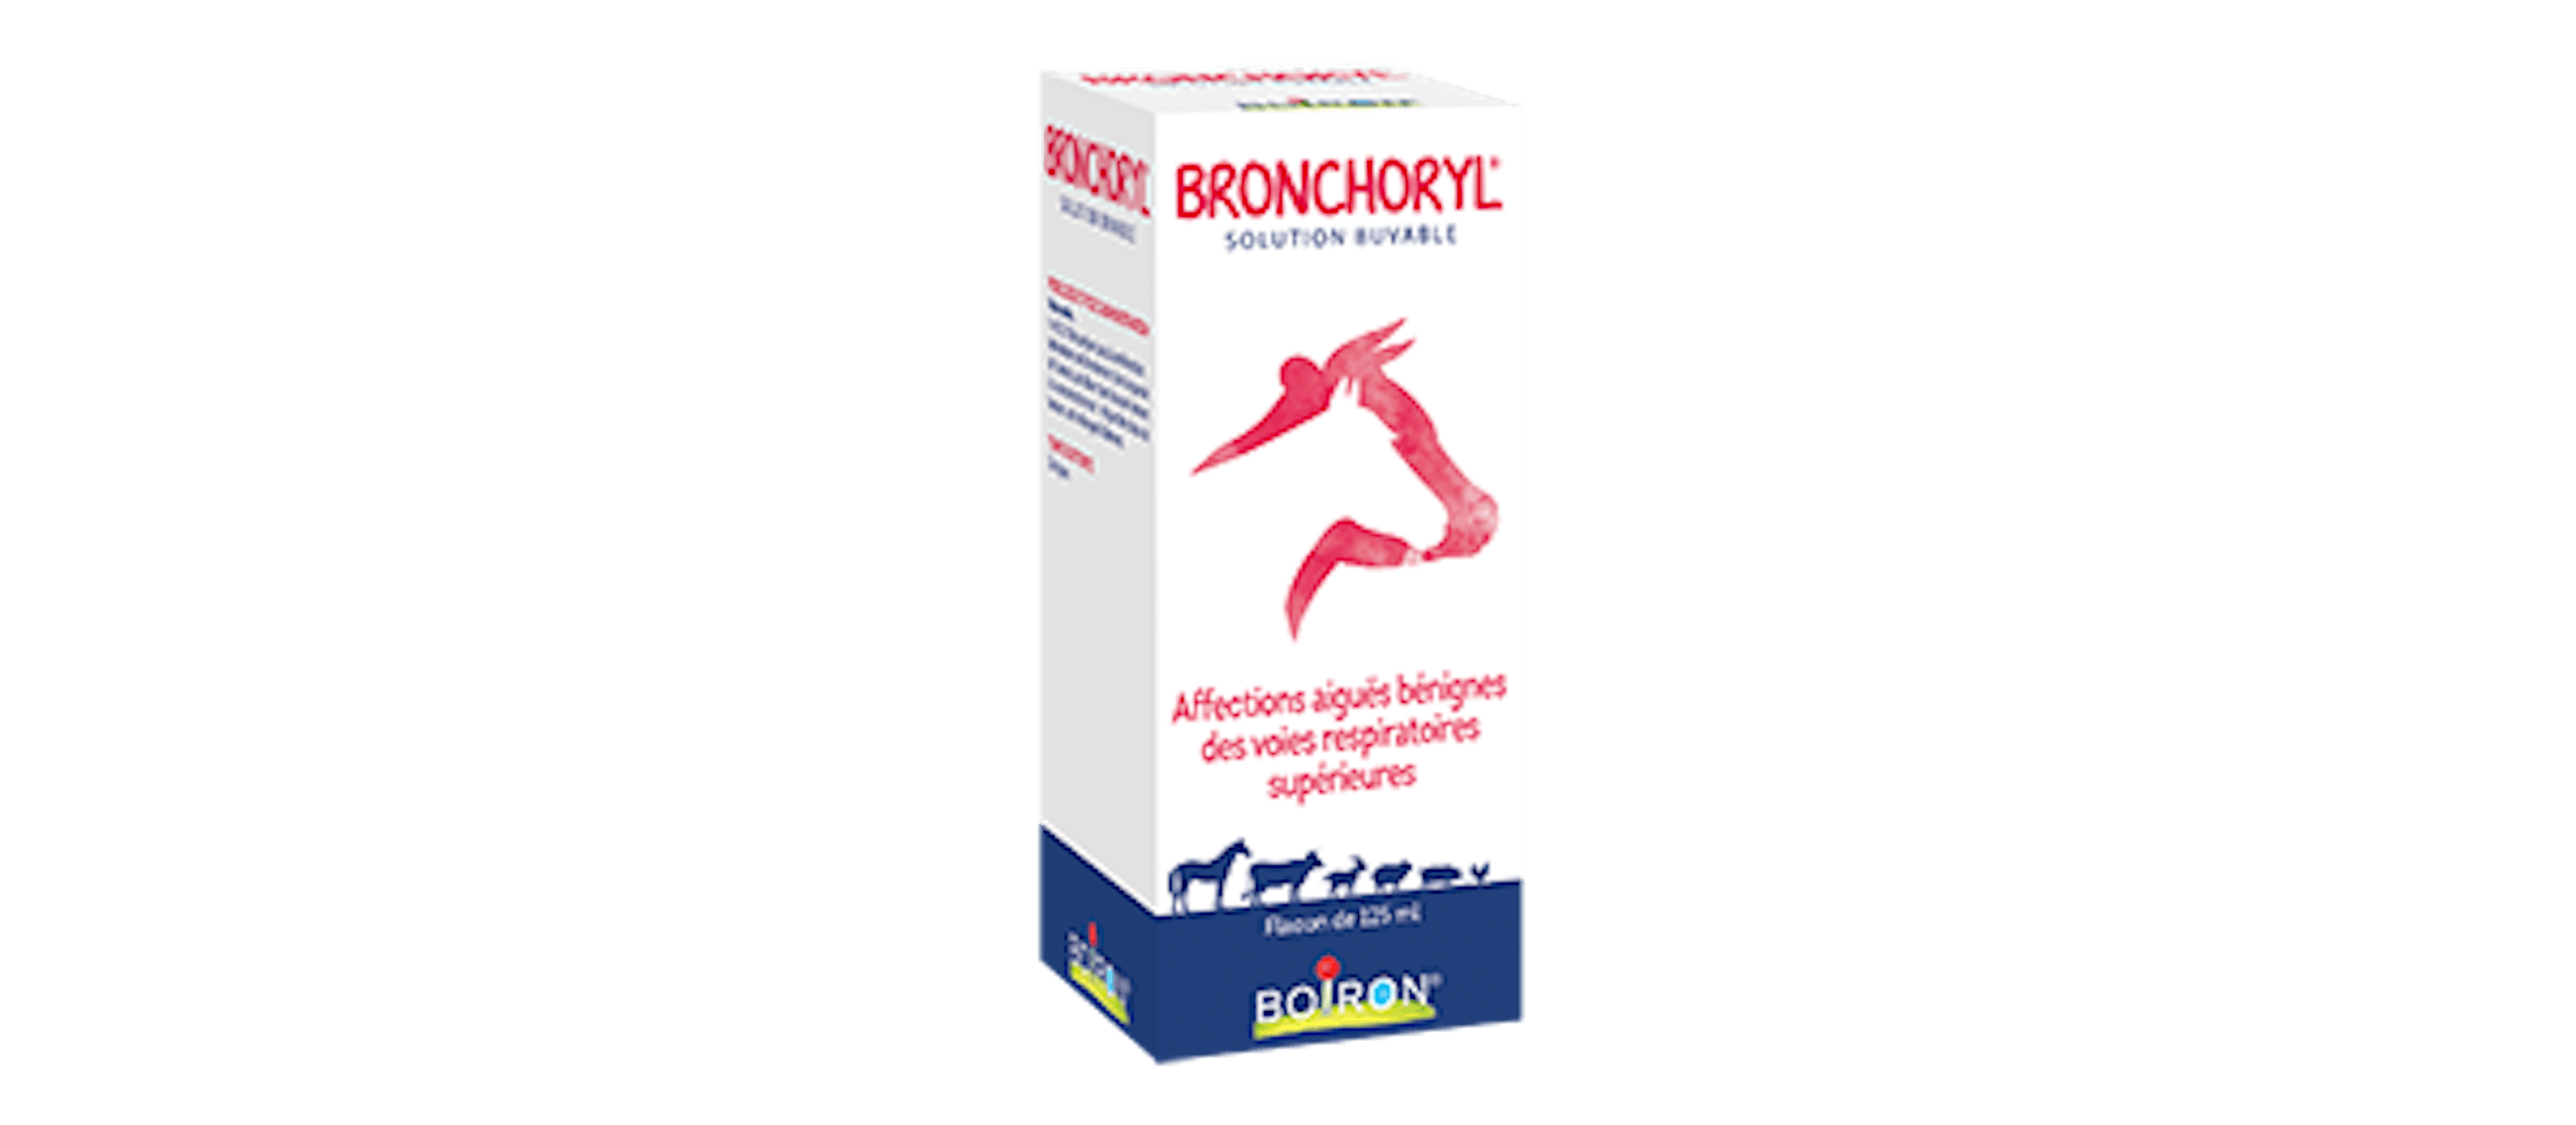 Bronchoryl Boiron